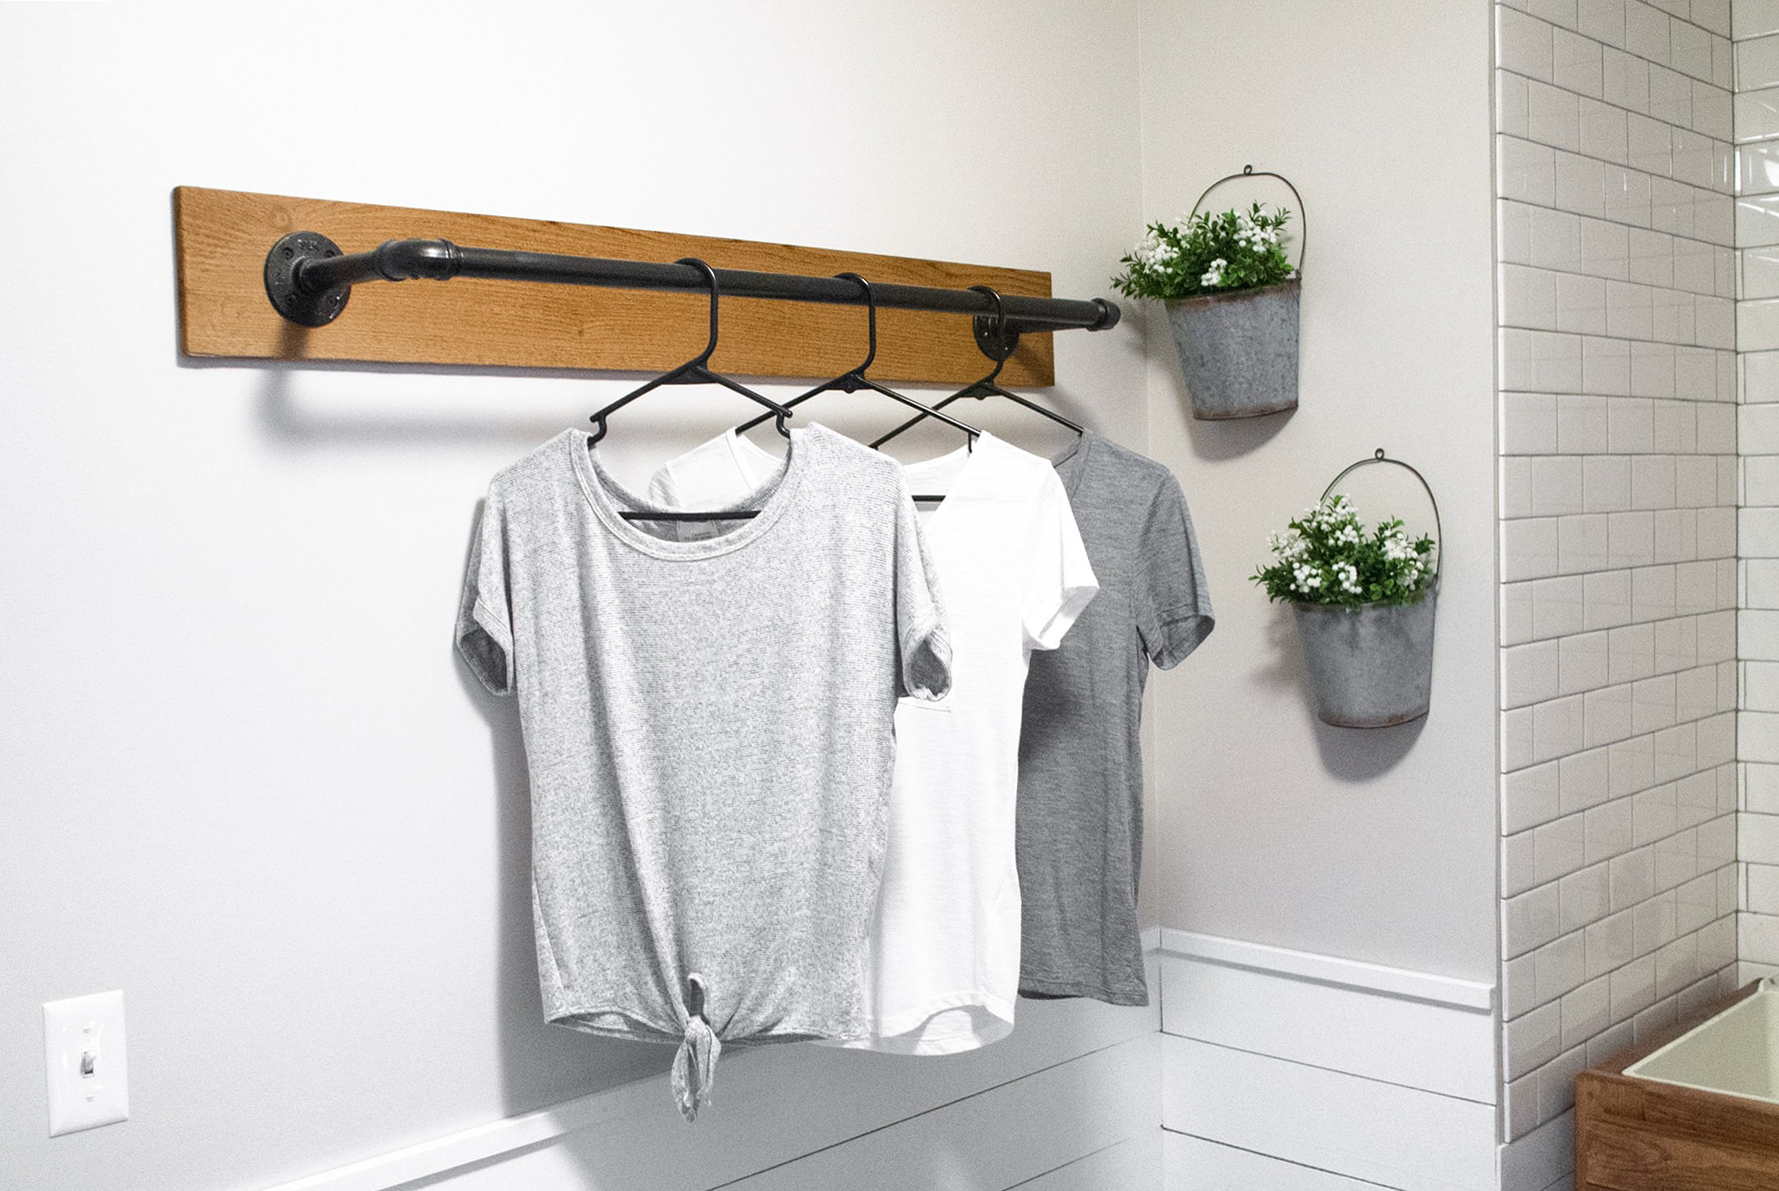 diy industrial pipe clothing rack wall mounted pipe clothing rack wall mounted